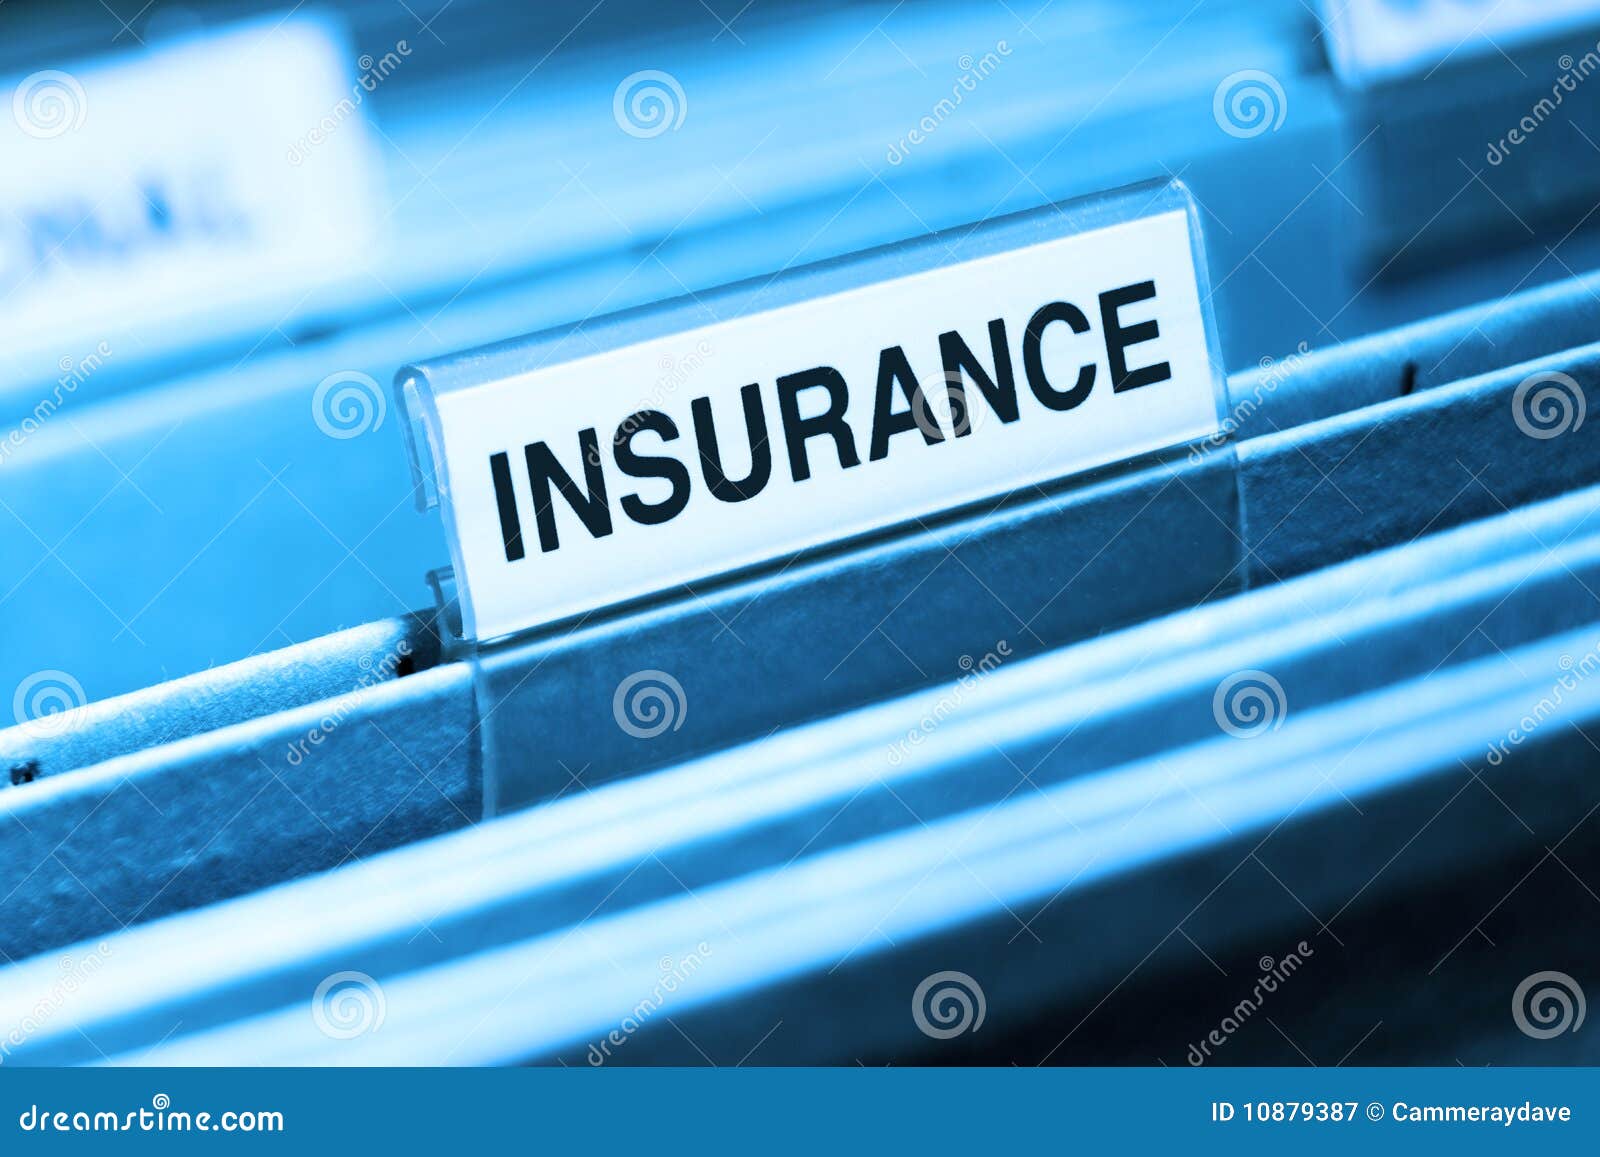 insurance file